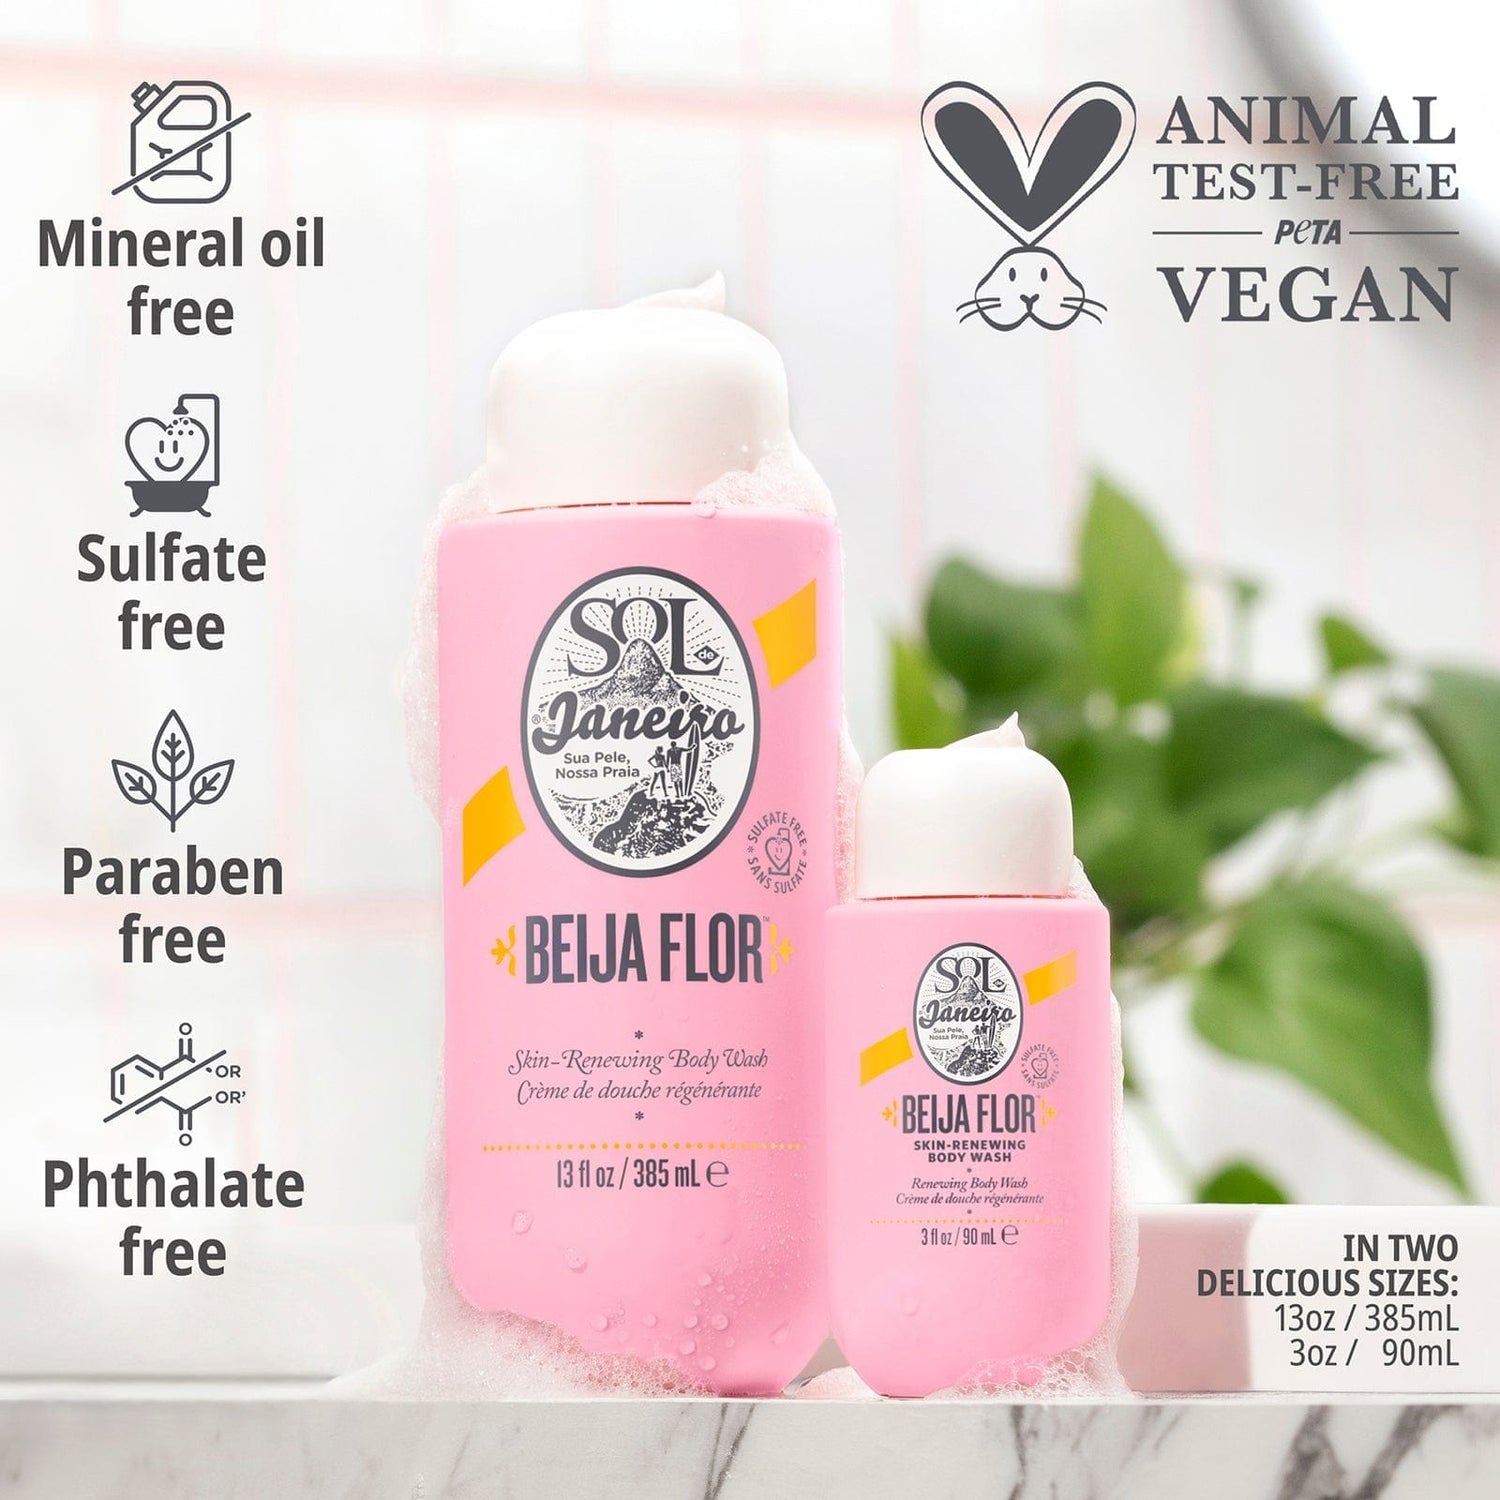 Animal test-free vega, free of mineral oil, sulfates, parabens, phthalates